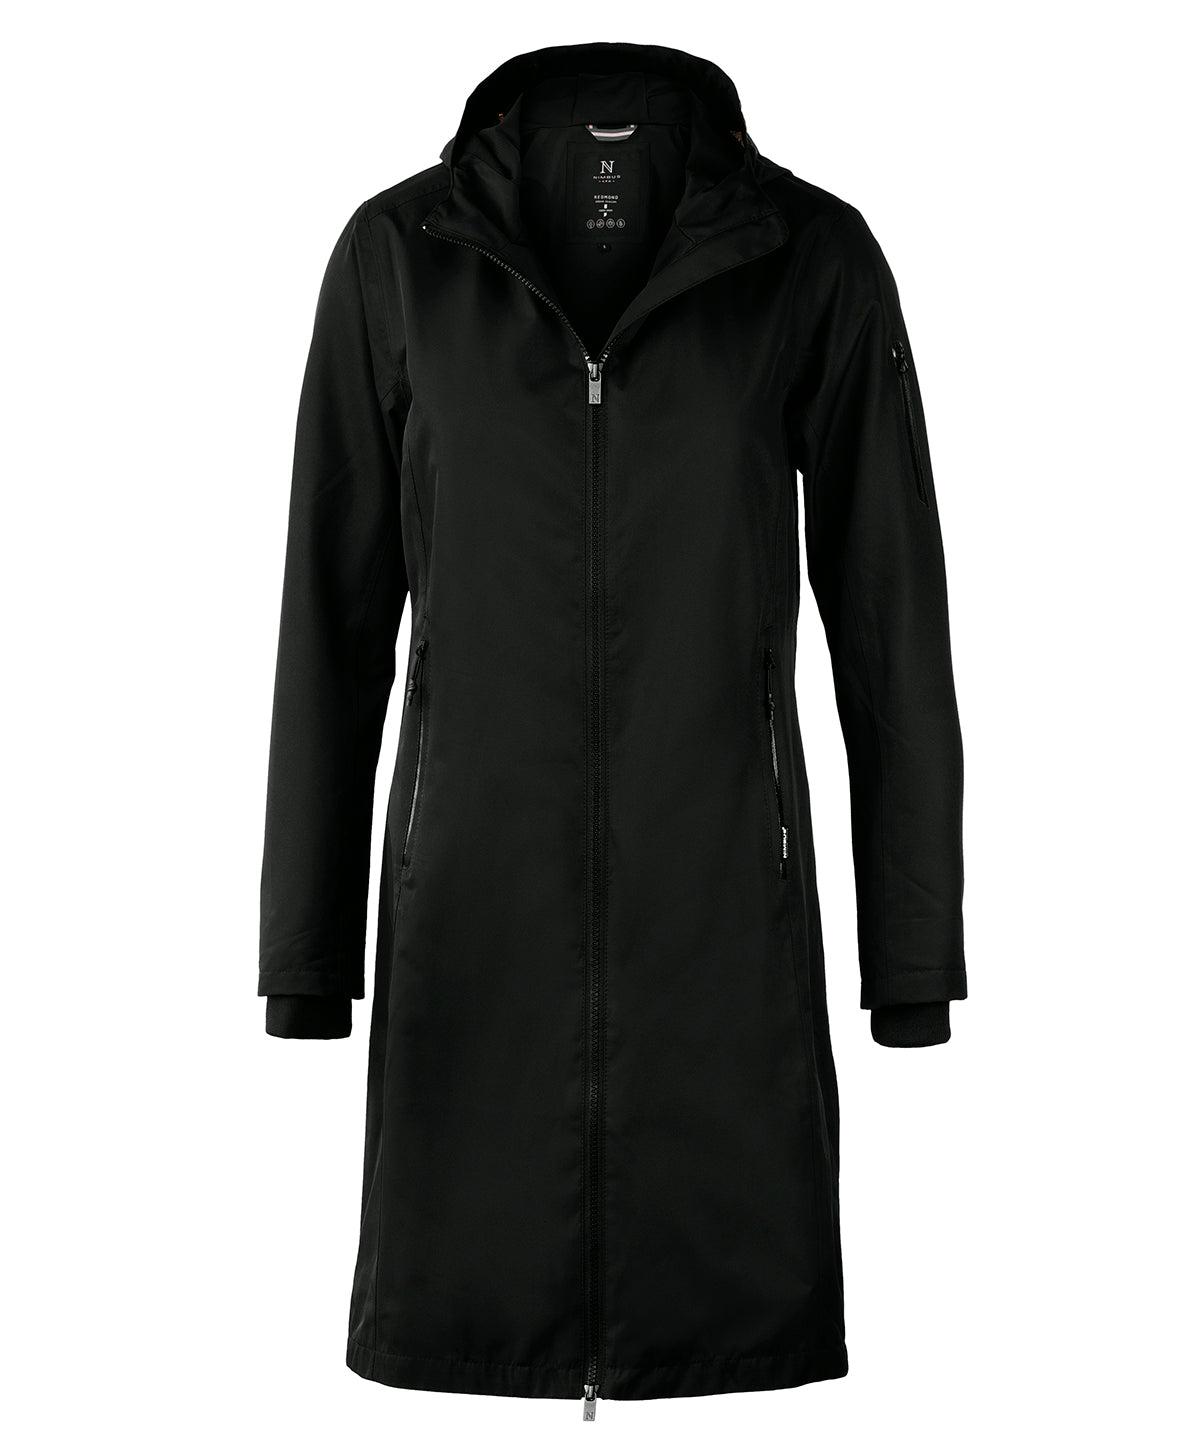 Personalised Jackets - Black Nimbus Women’s Redmond – elegant technical jacket